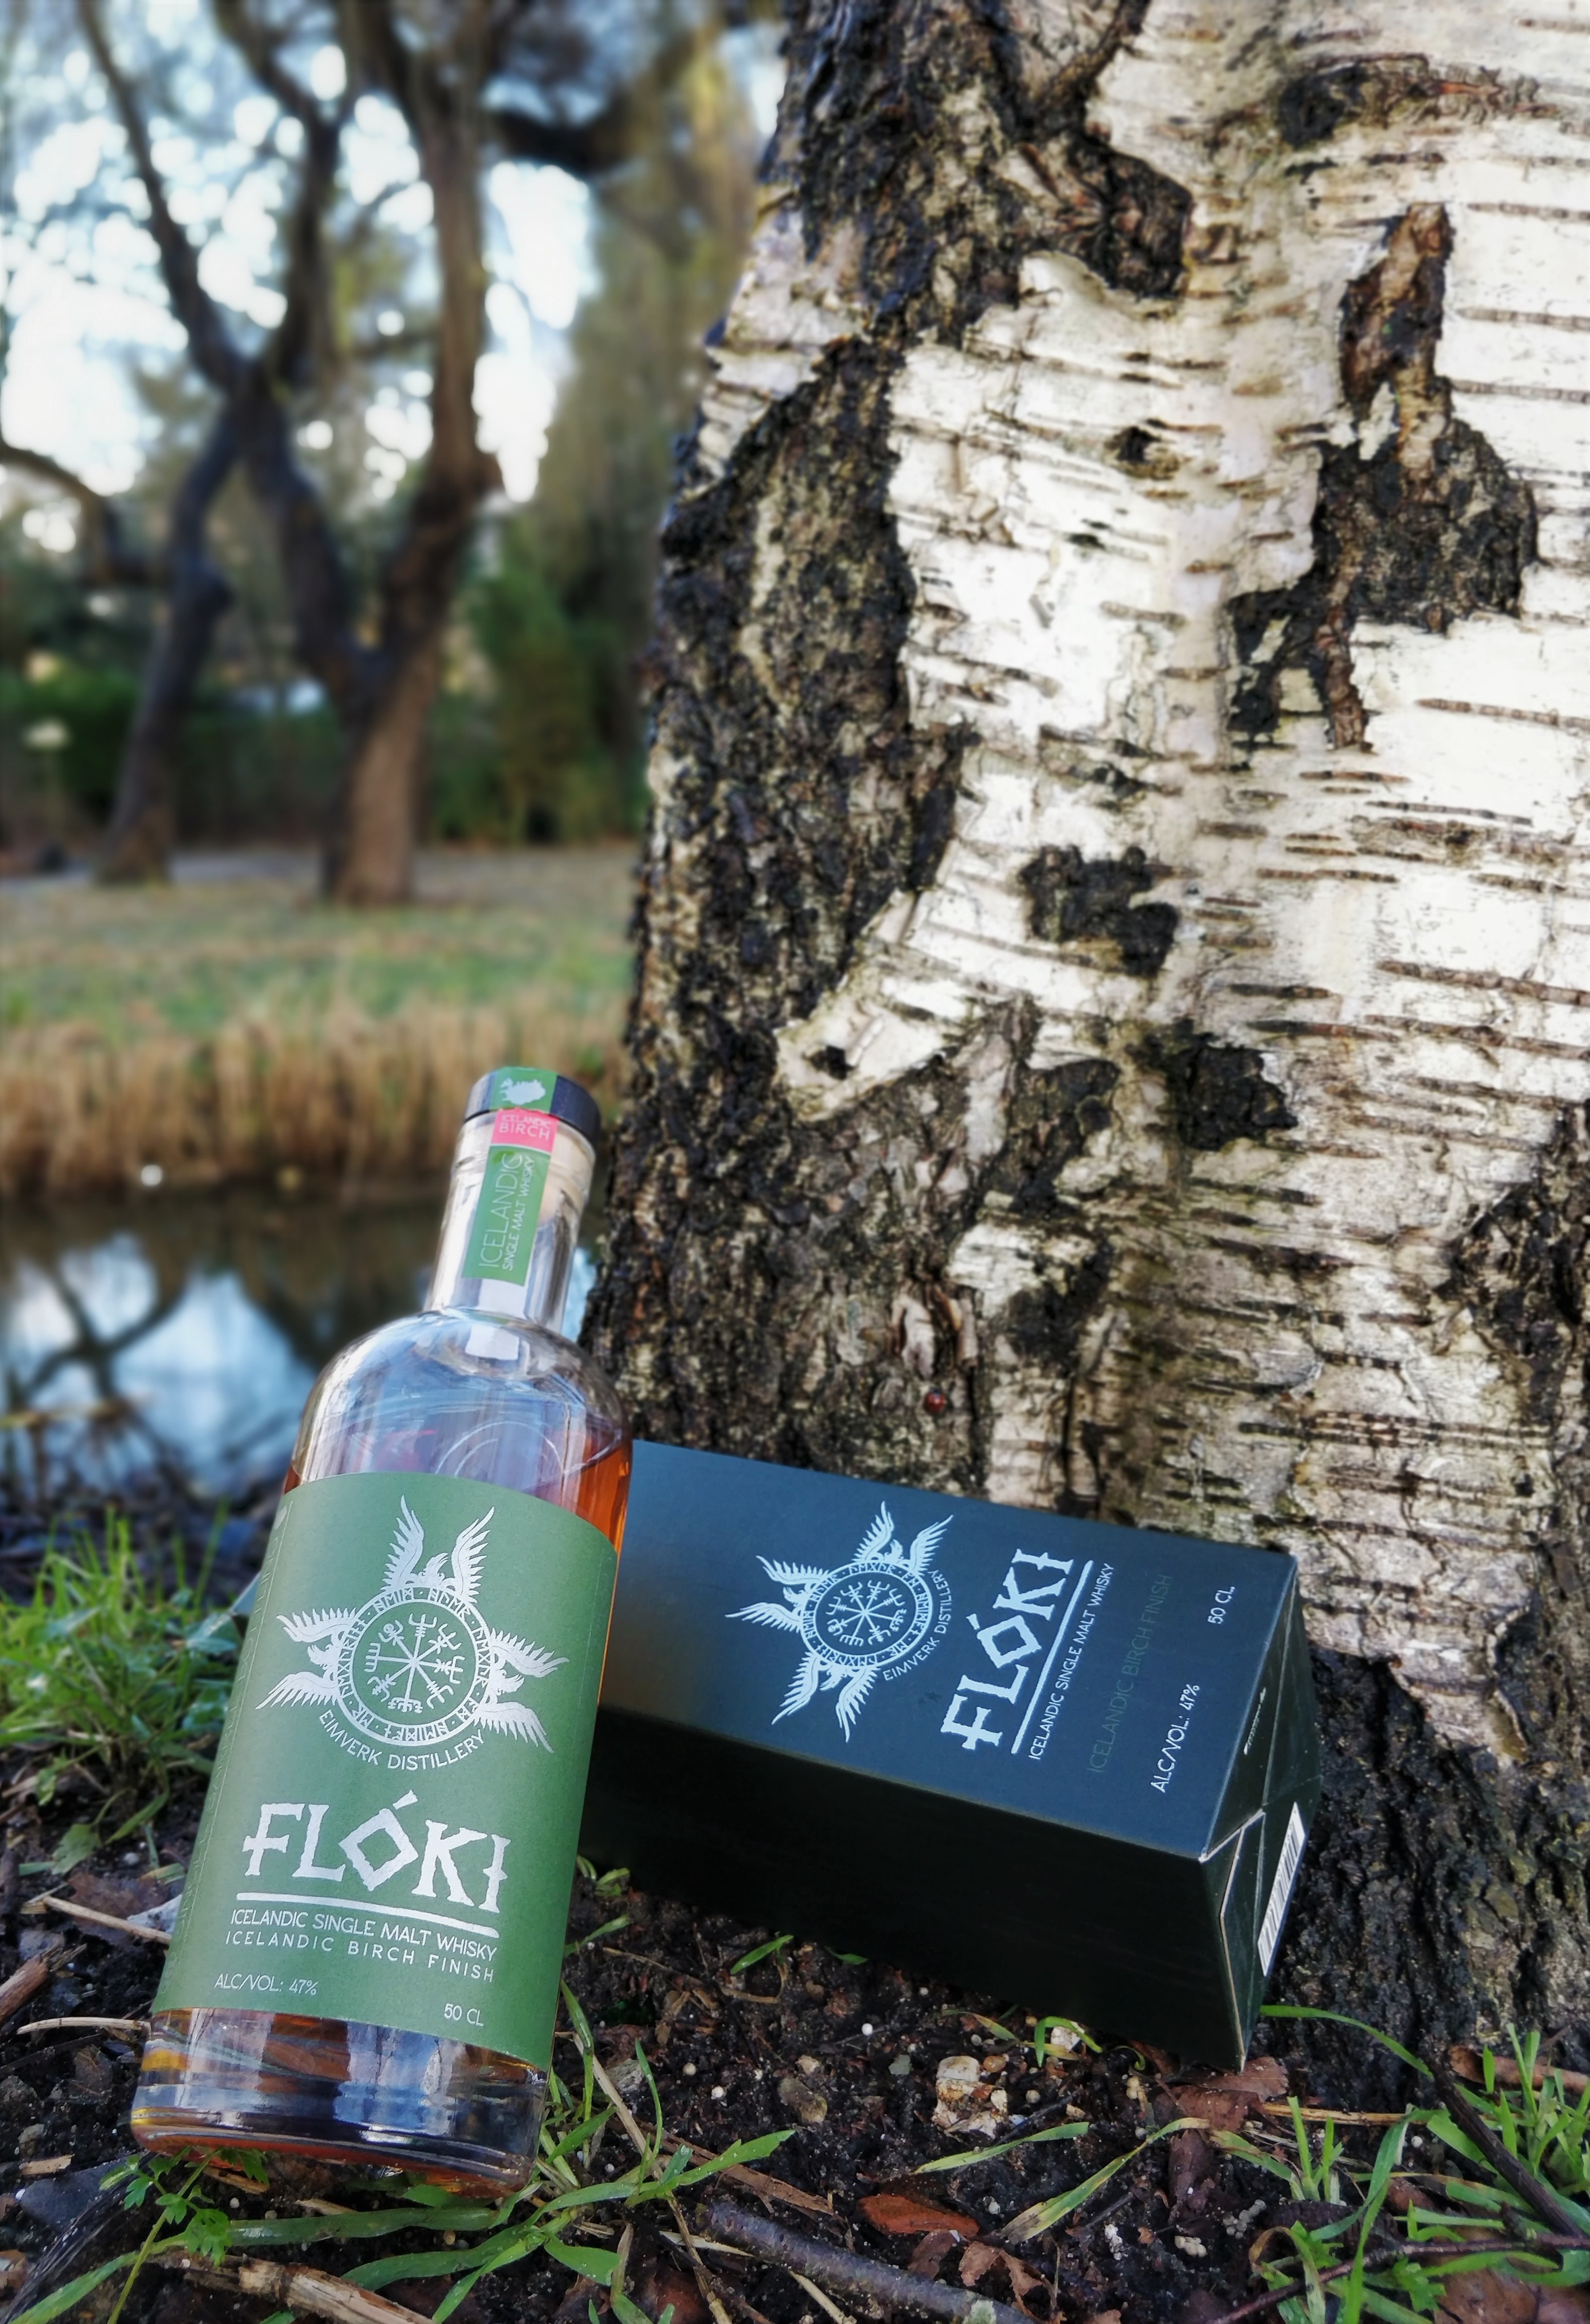 Flóki Icelandic Birch Finish – whiskystories